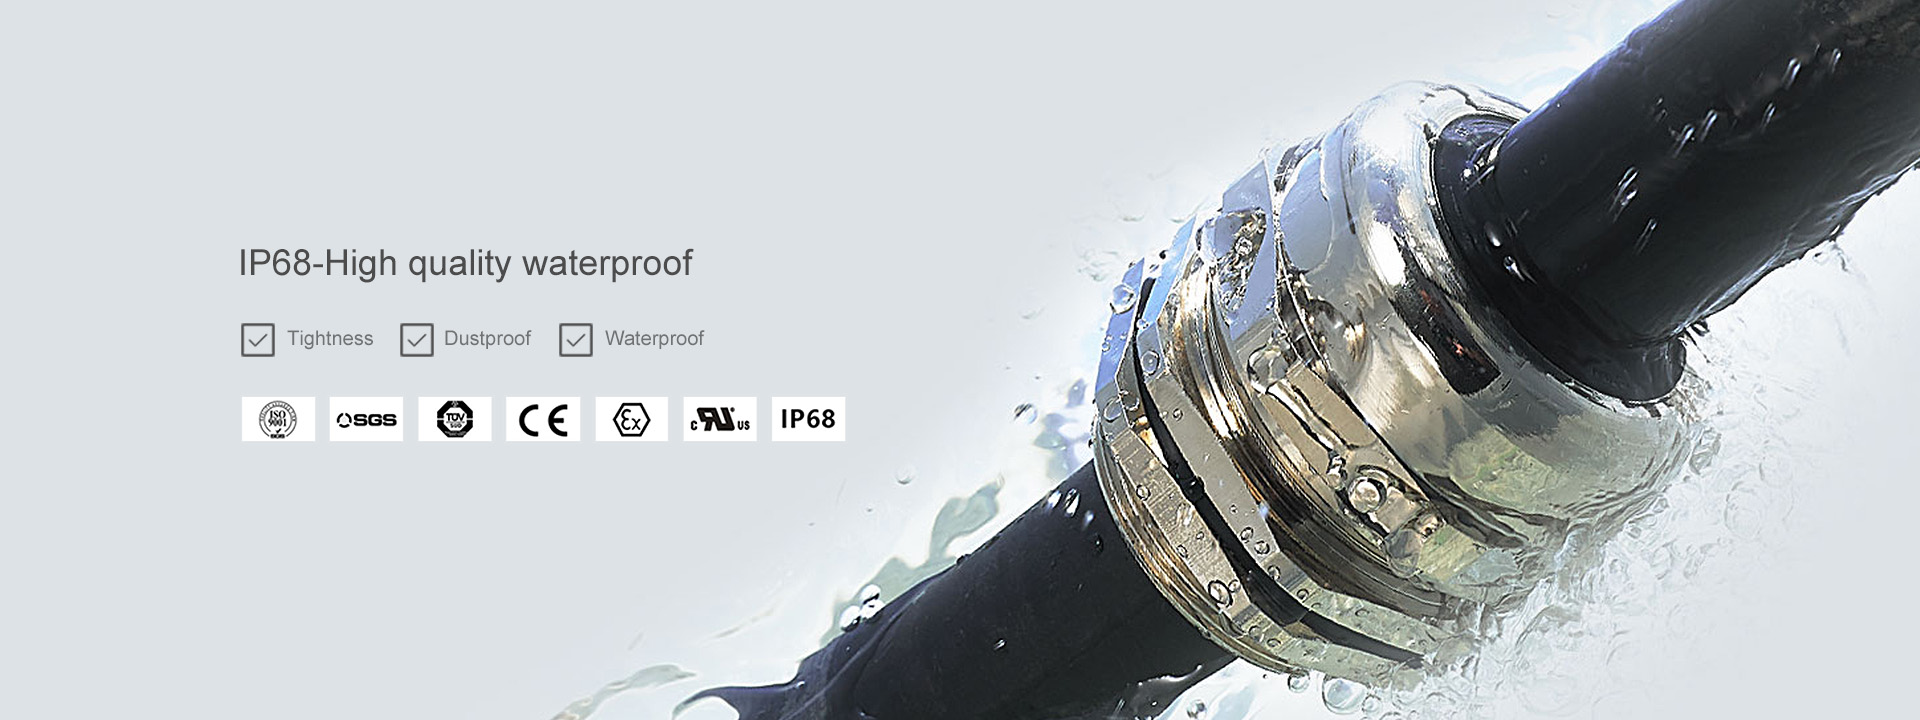 IP68-High quality waterproof